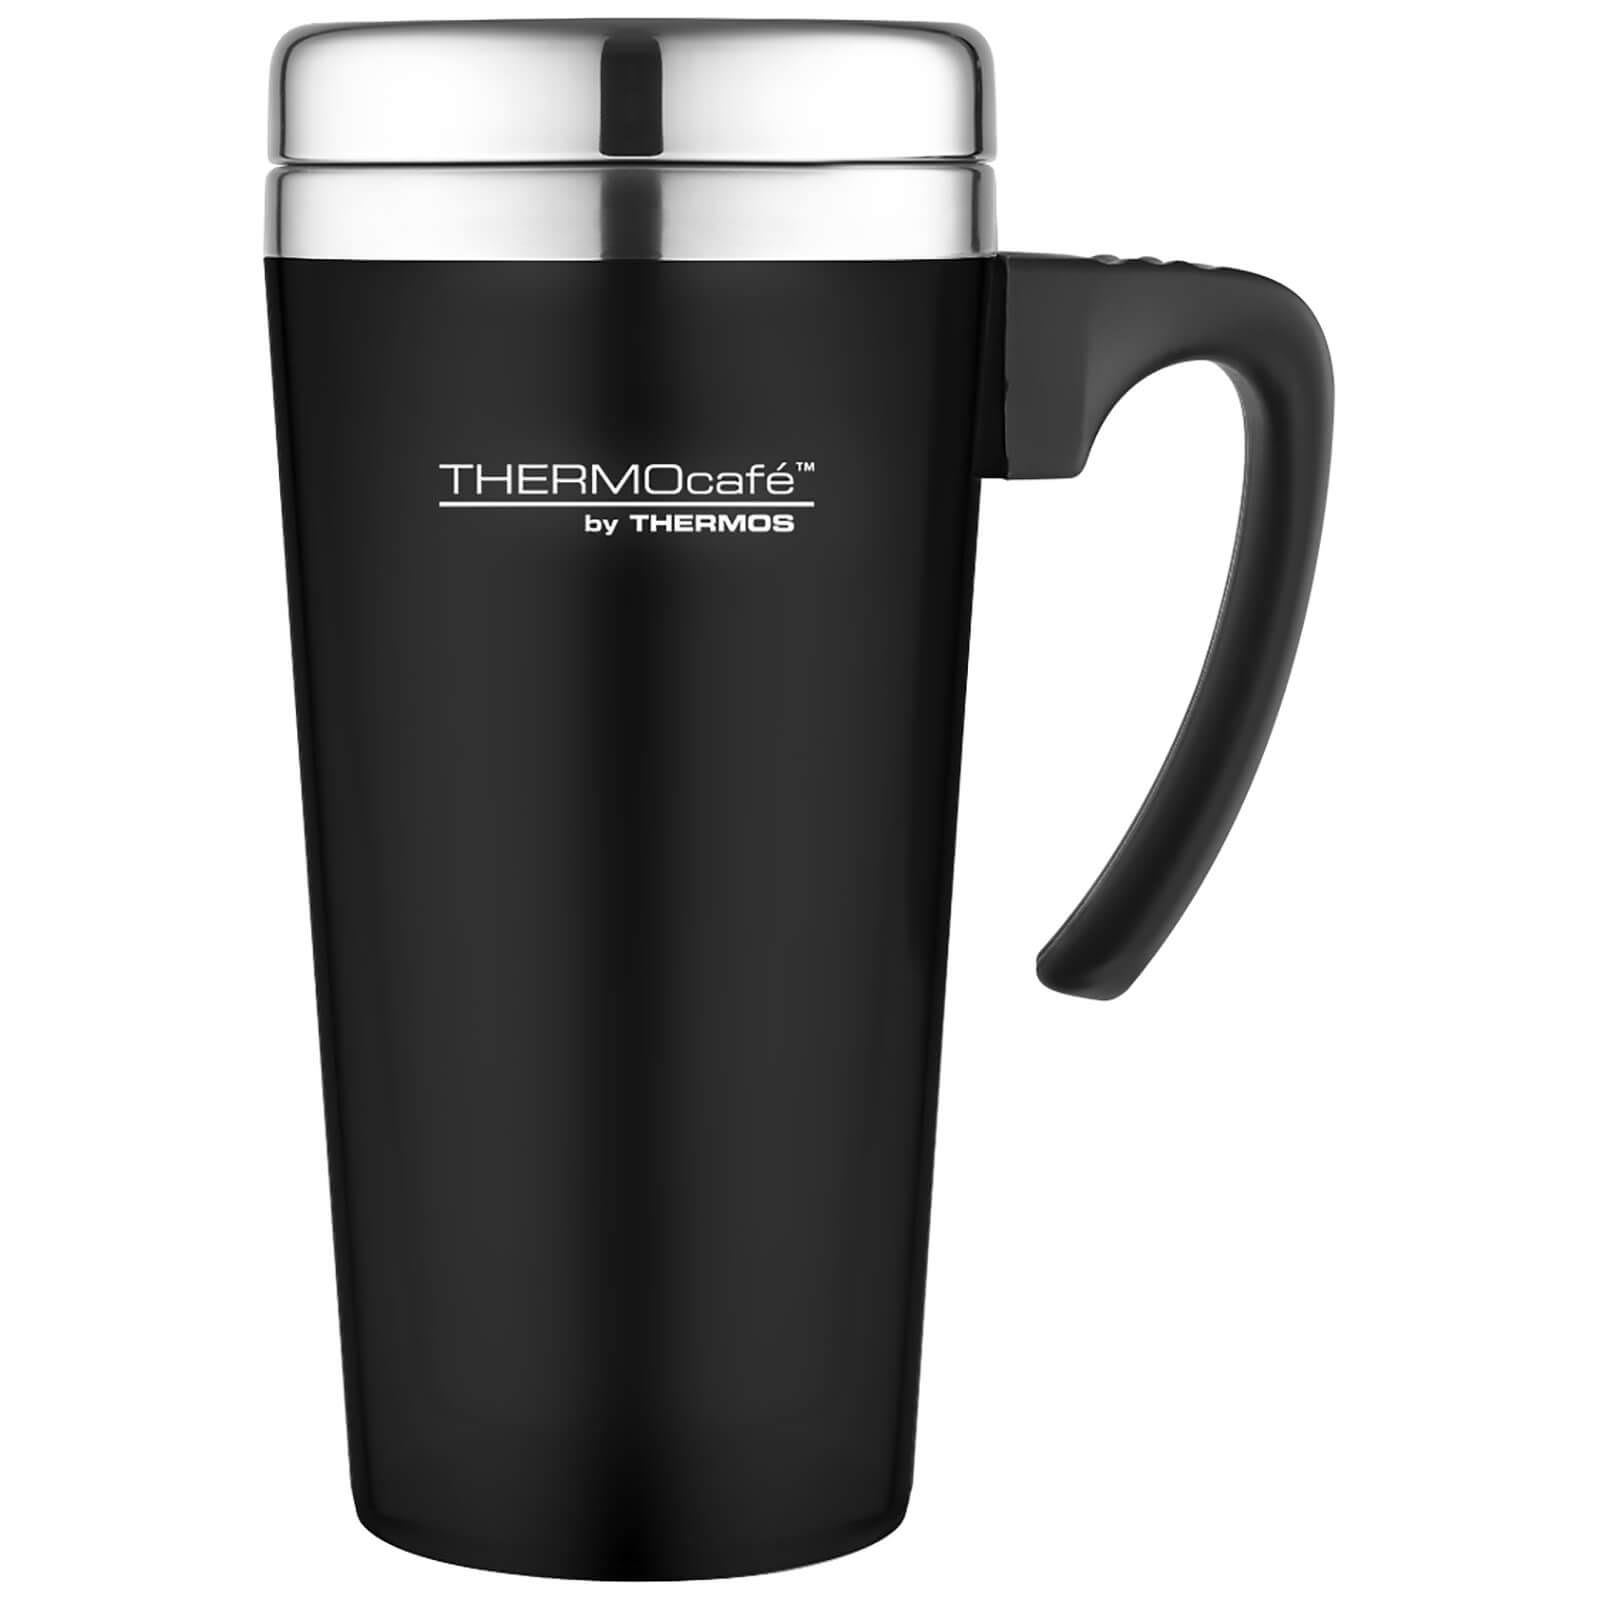 Thermos Thermocafe Zest Travel Mug - Black, 420ml